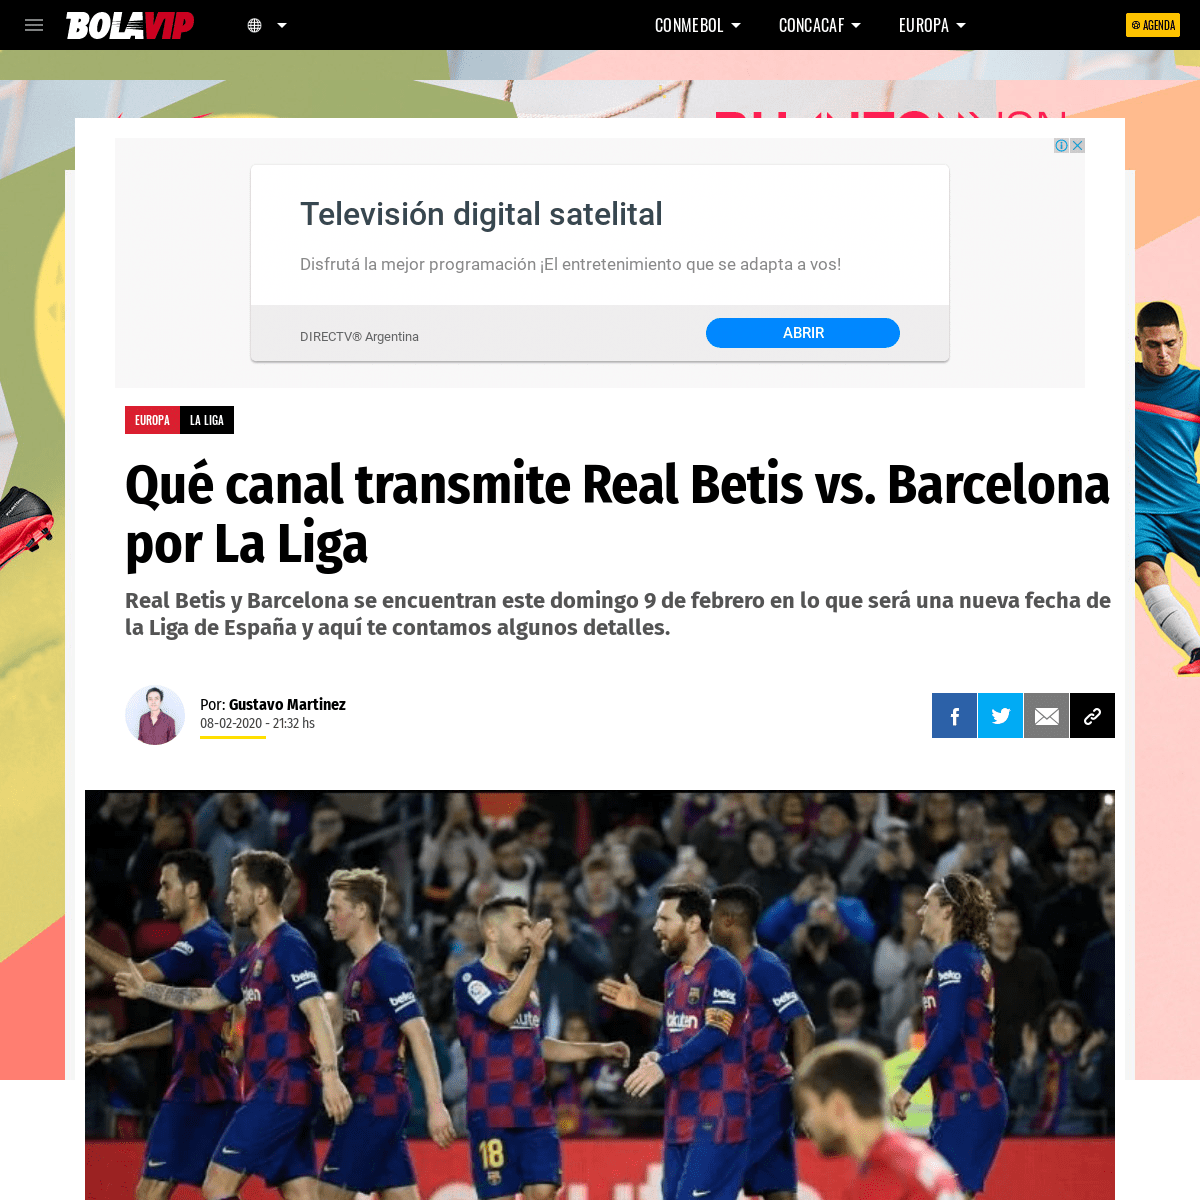 A complete backup of bolavip.com/europa/Que-canal-transmite-Real-Betis-vs.-Barcelona-por-La-Liga-F22-20200208-0123.html